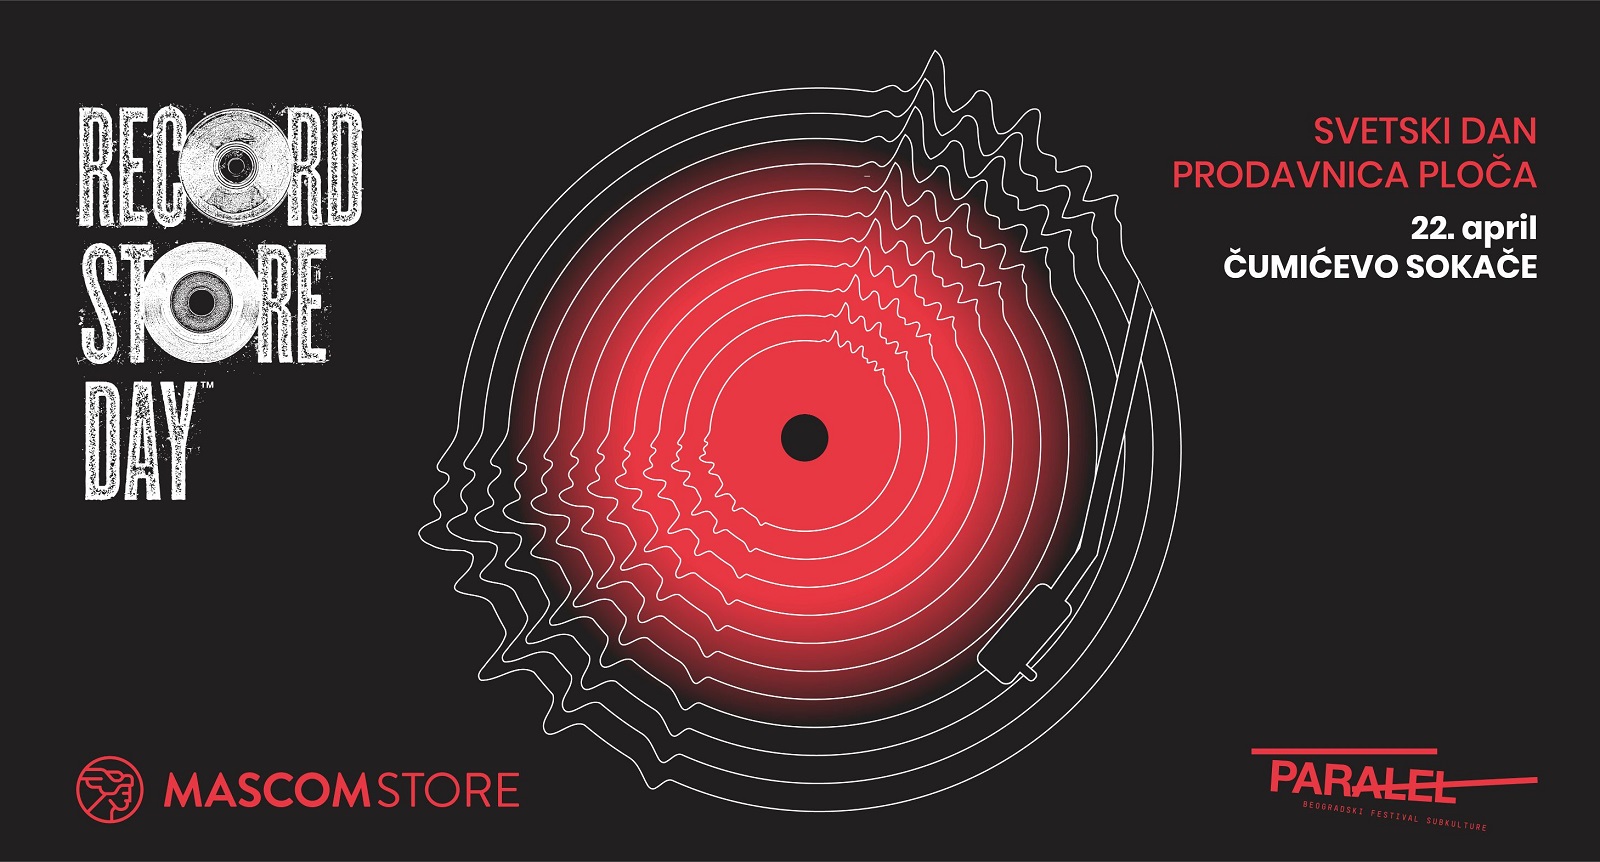 Record Store Day - Praznik nezavisnih prodavnica ploča 22. aprila u Čumićevom sokačetu